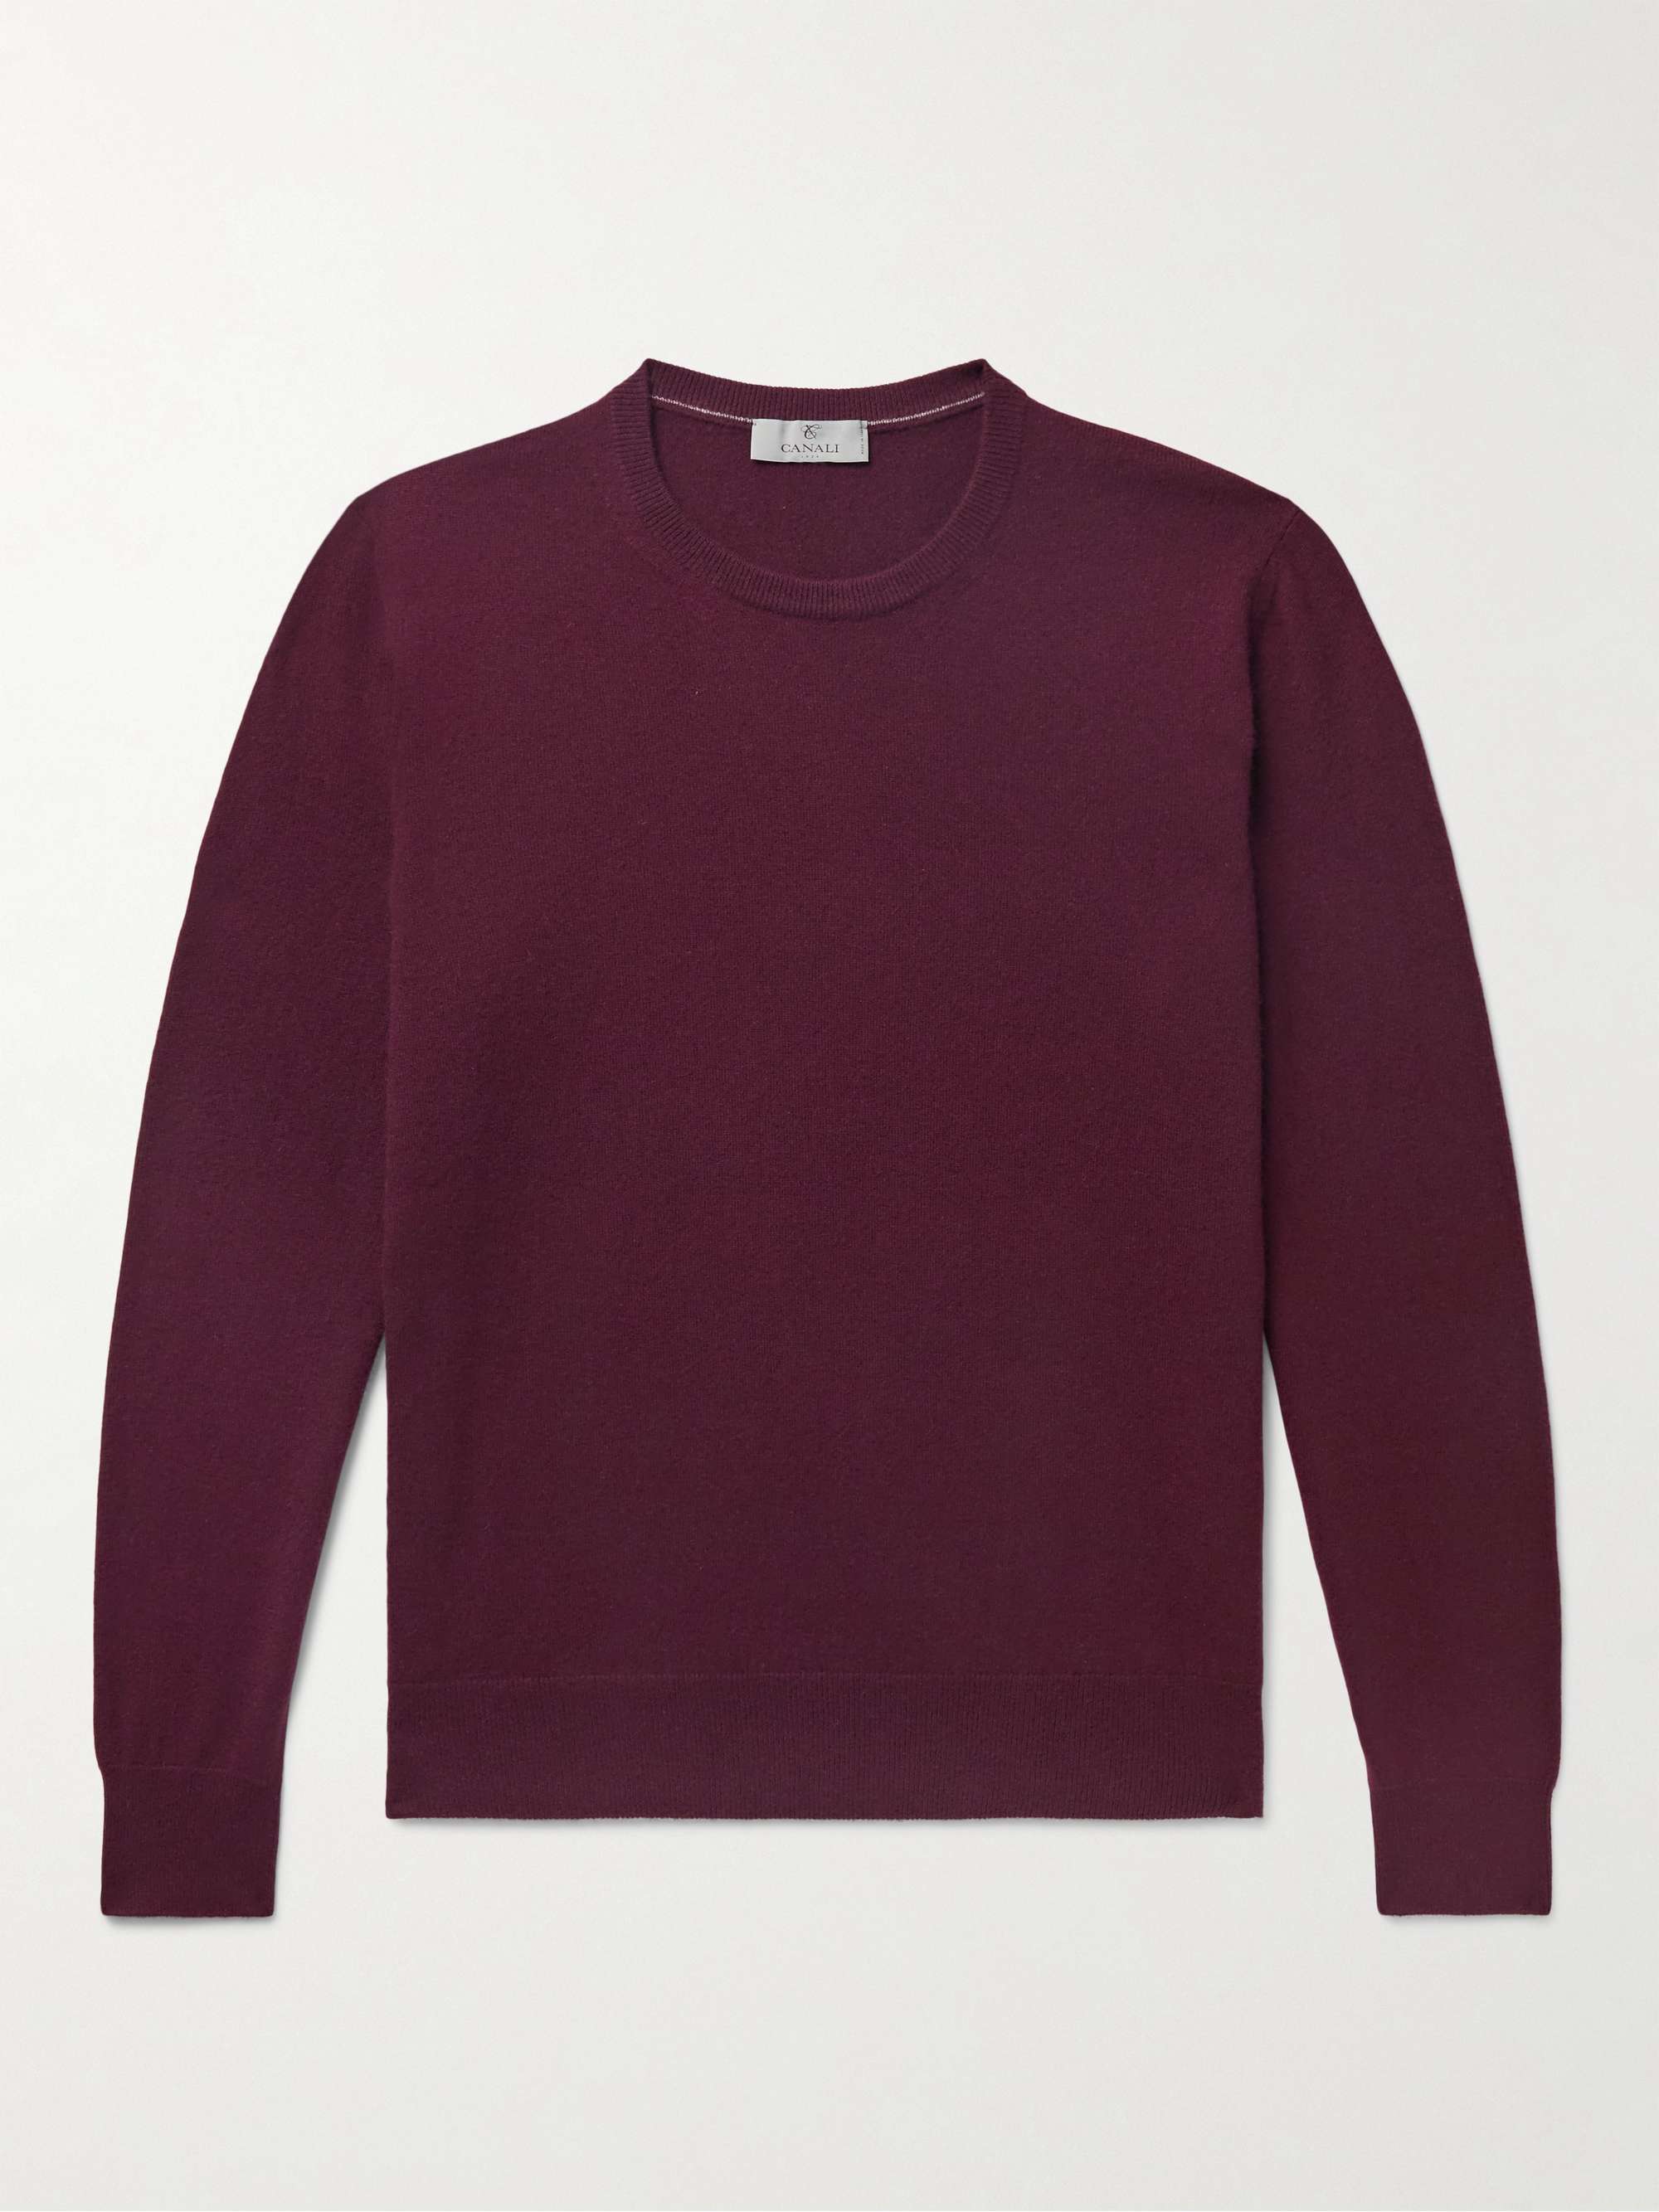 CANALI Cashmere Sweater for Men | MR PORTER